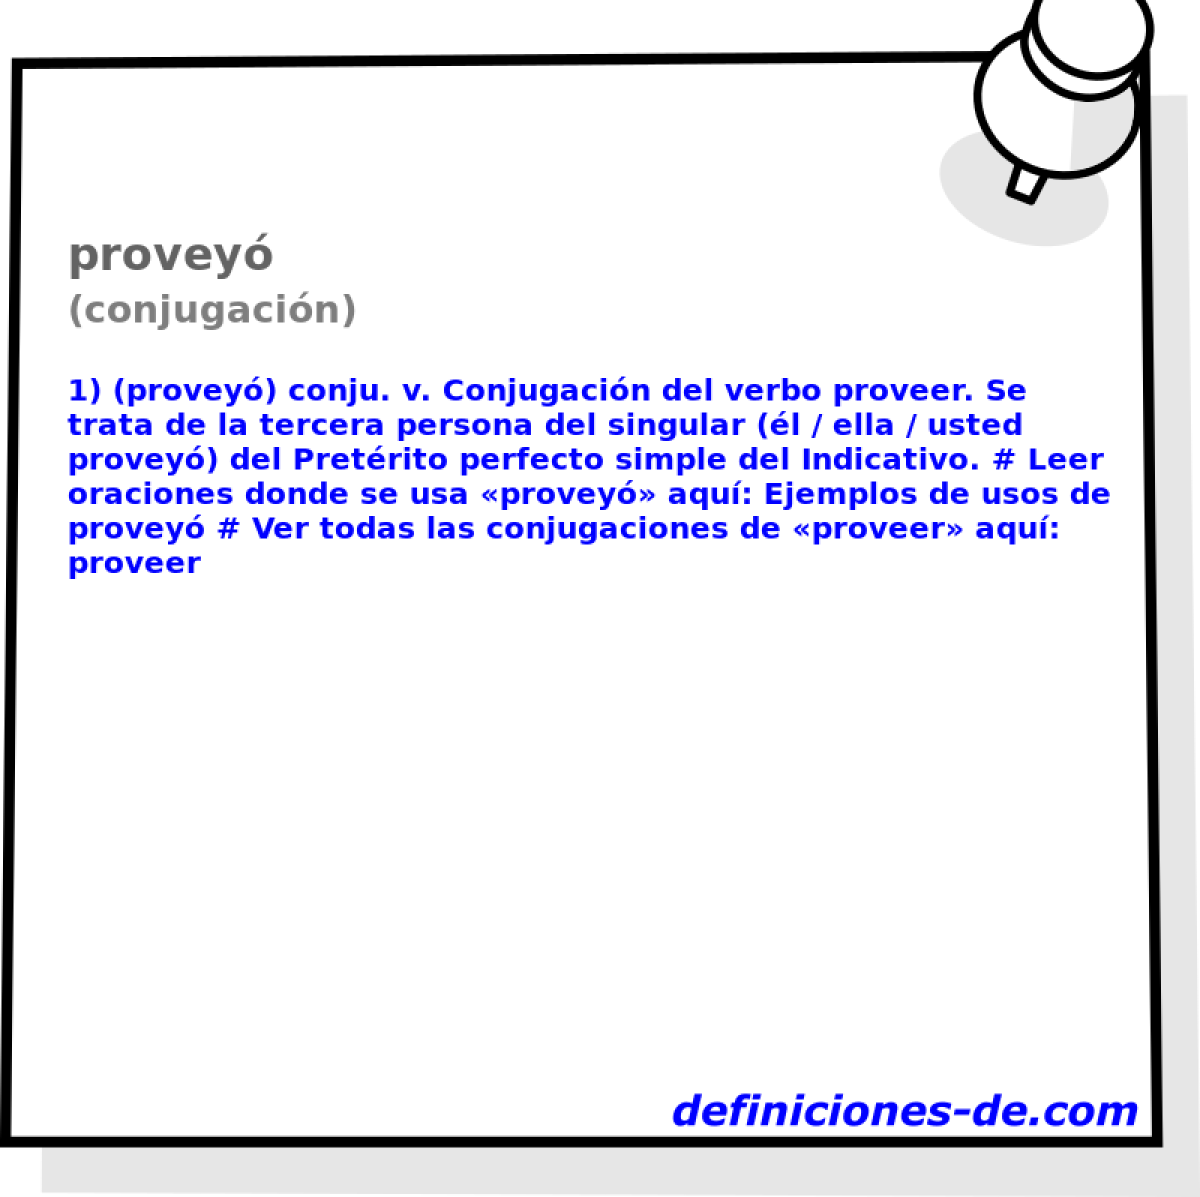 provey (conjugacin)